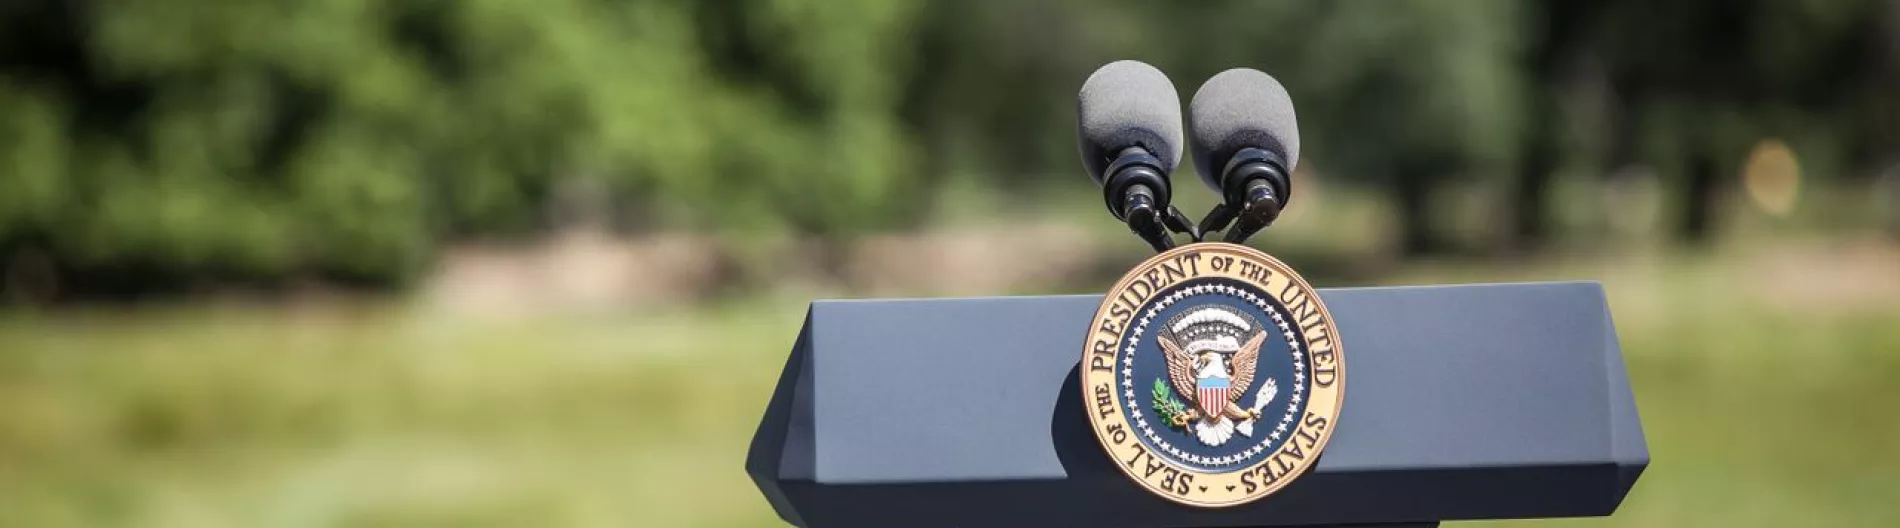 Presidential seal on outside podium